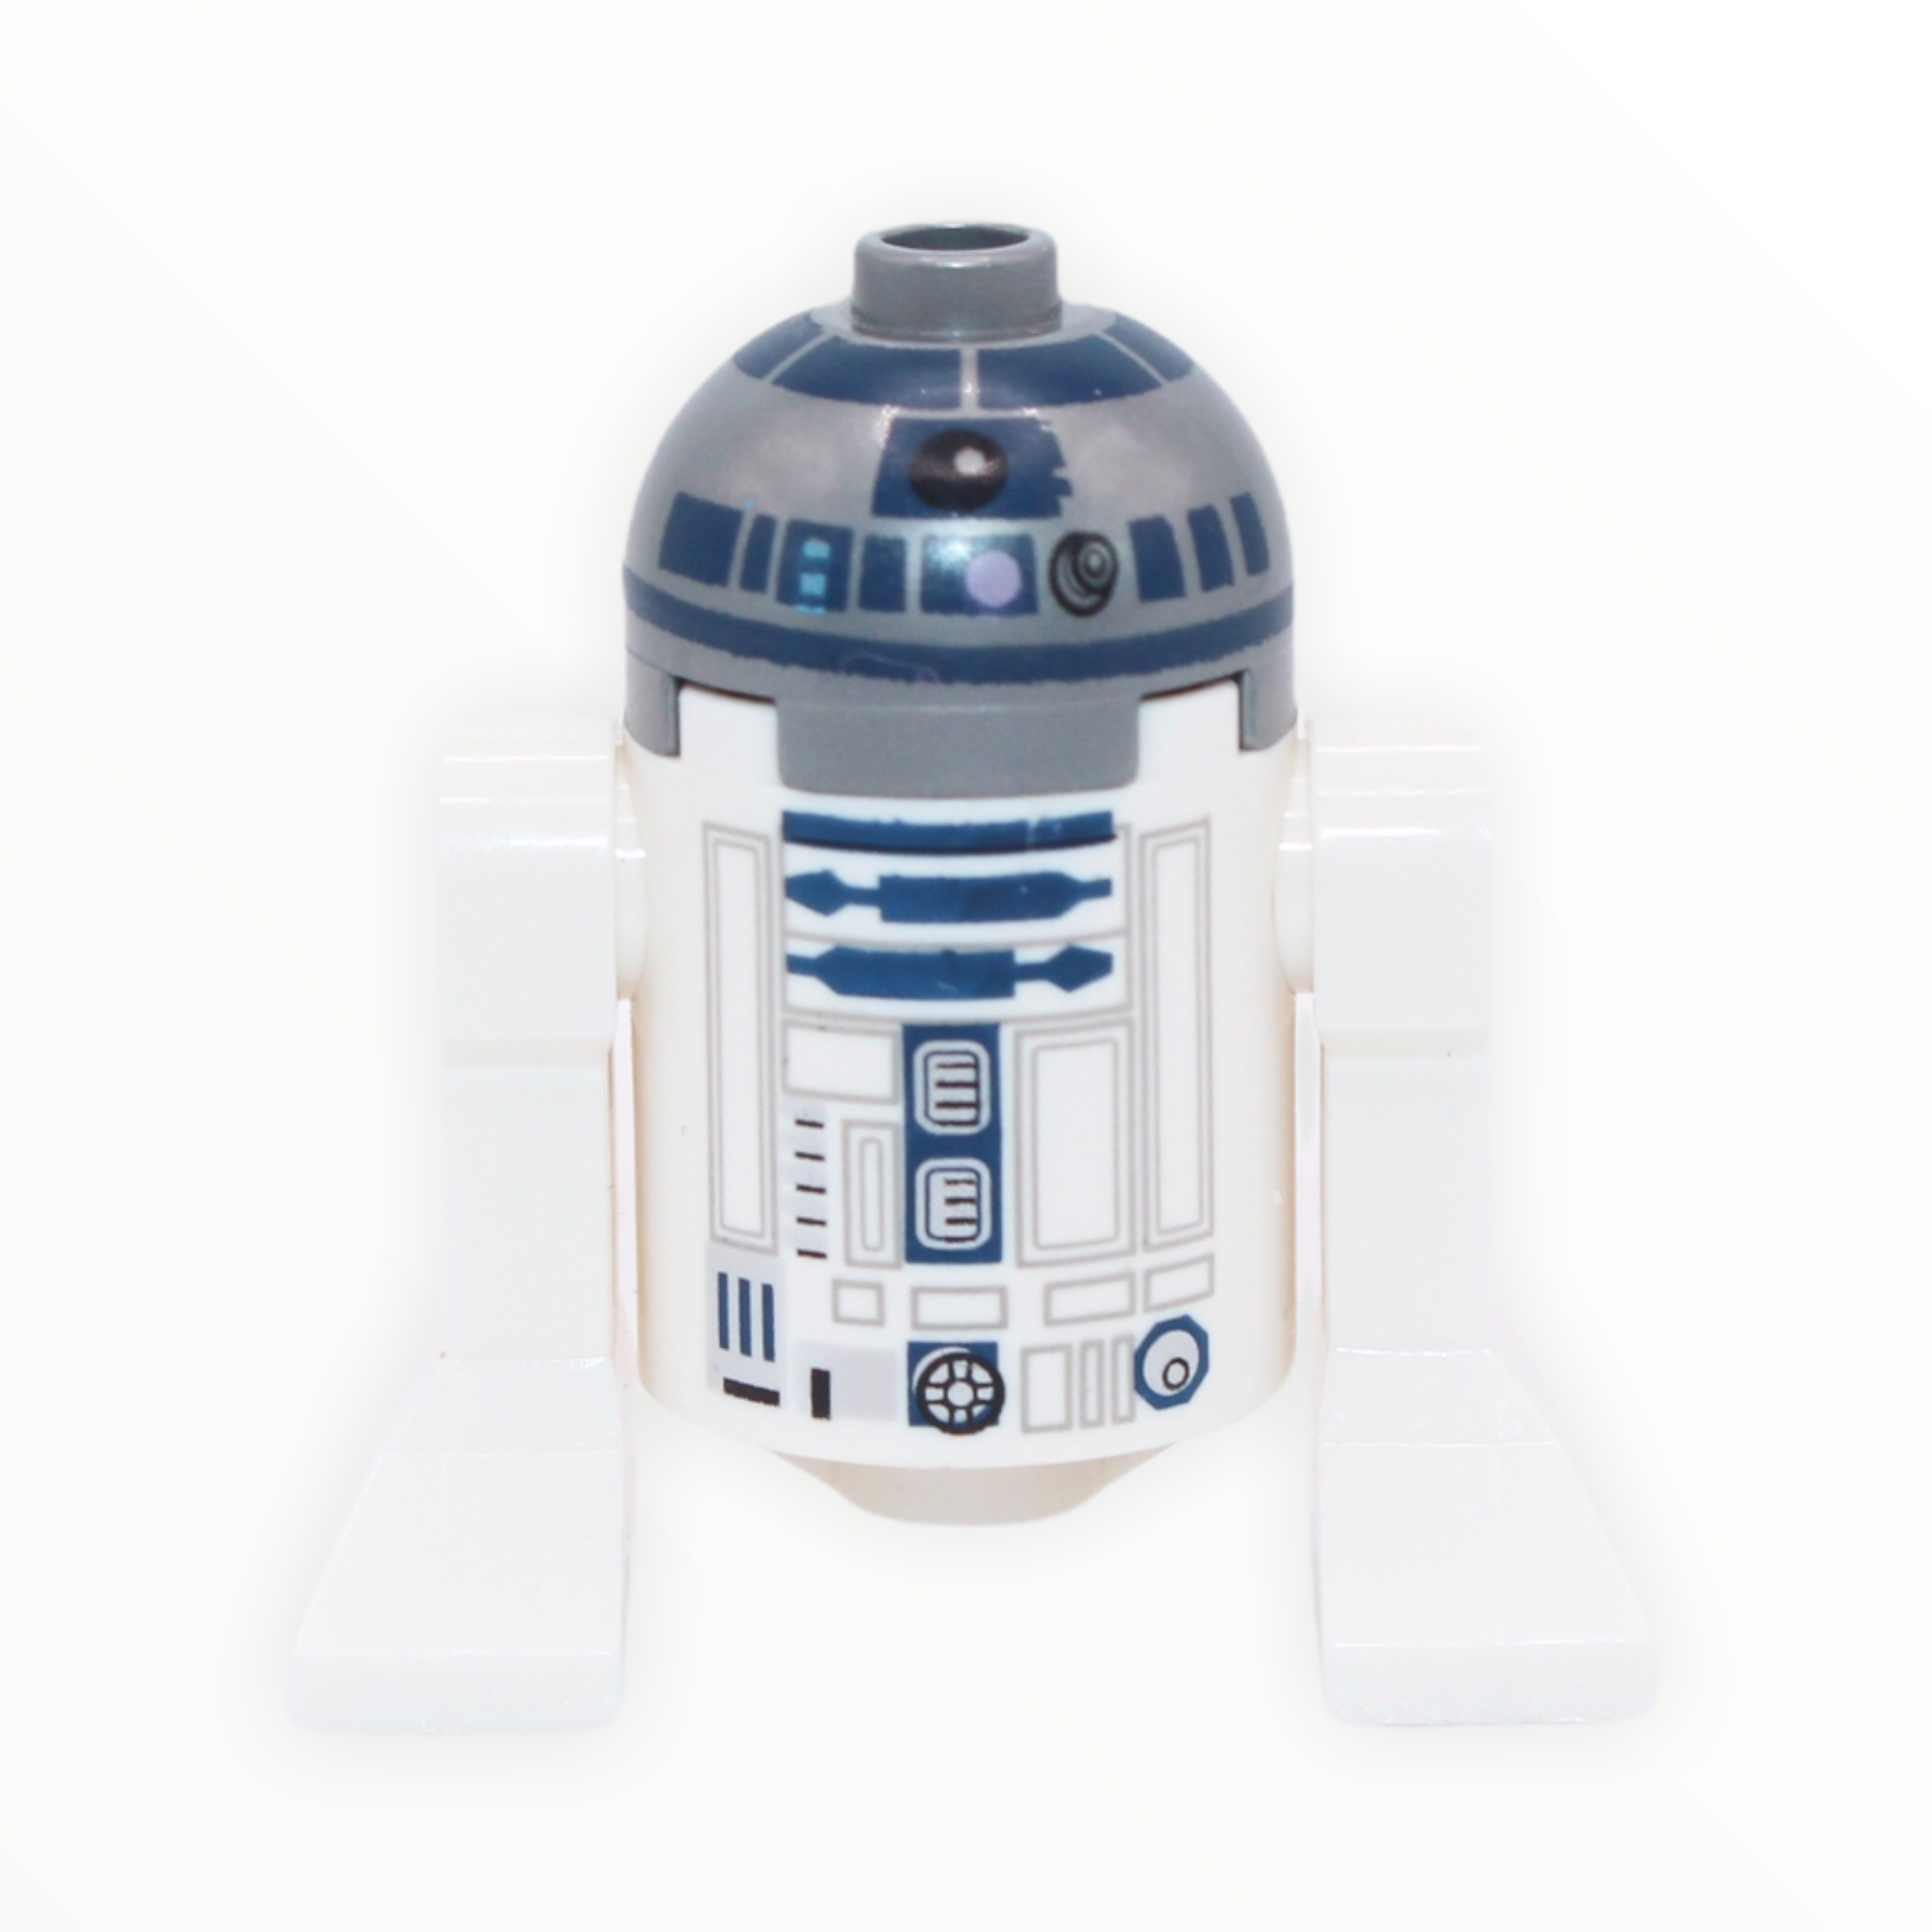 R2-D2 (flat silver, lavender dot, small photoreceptor)